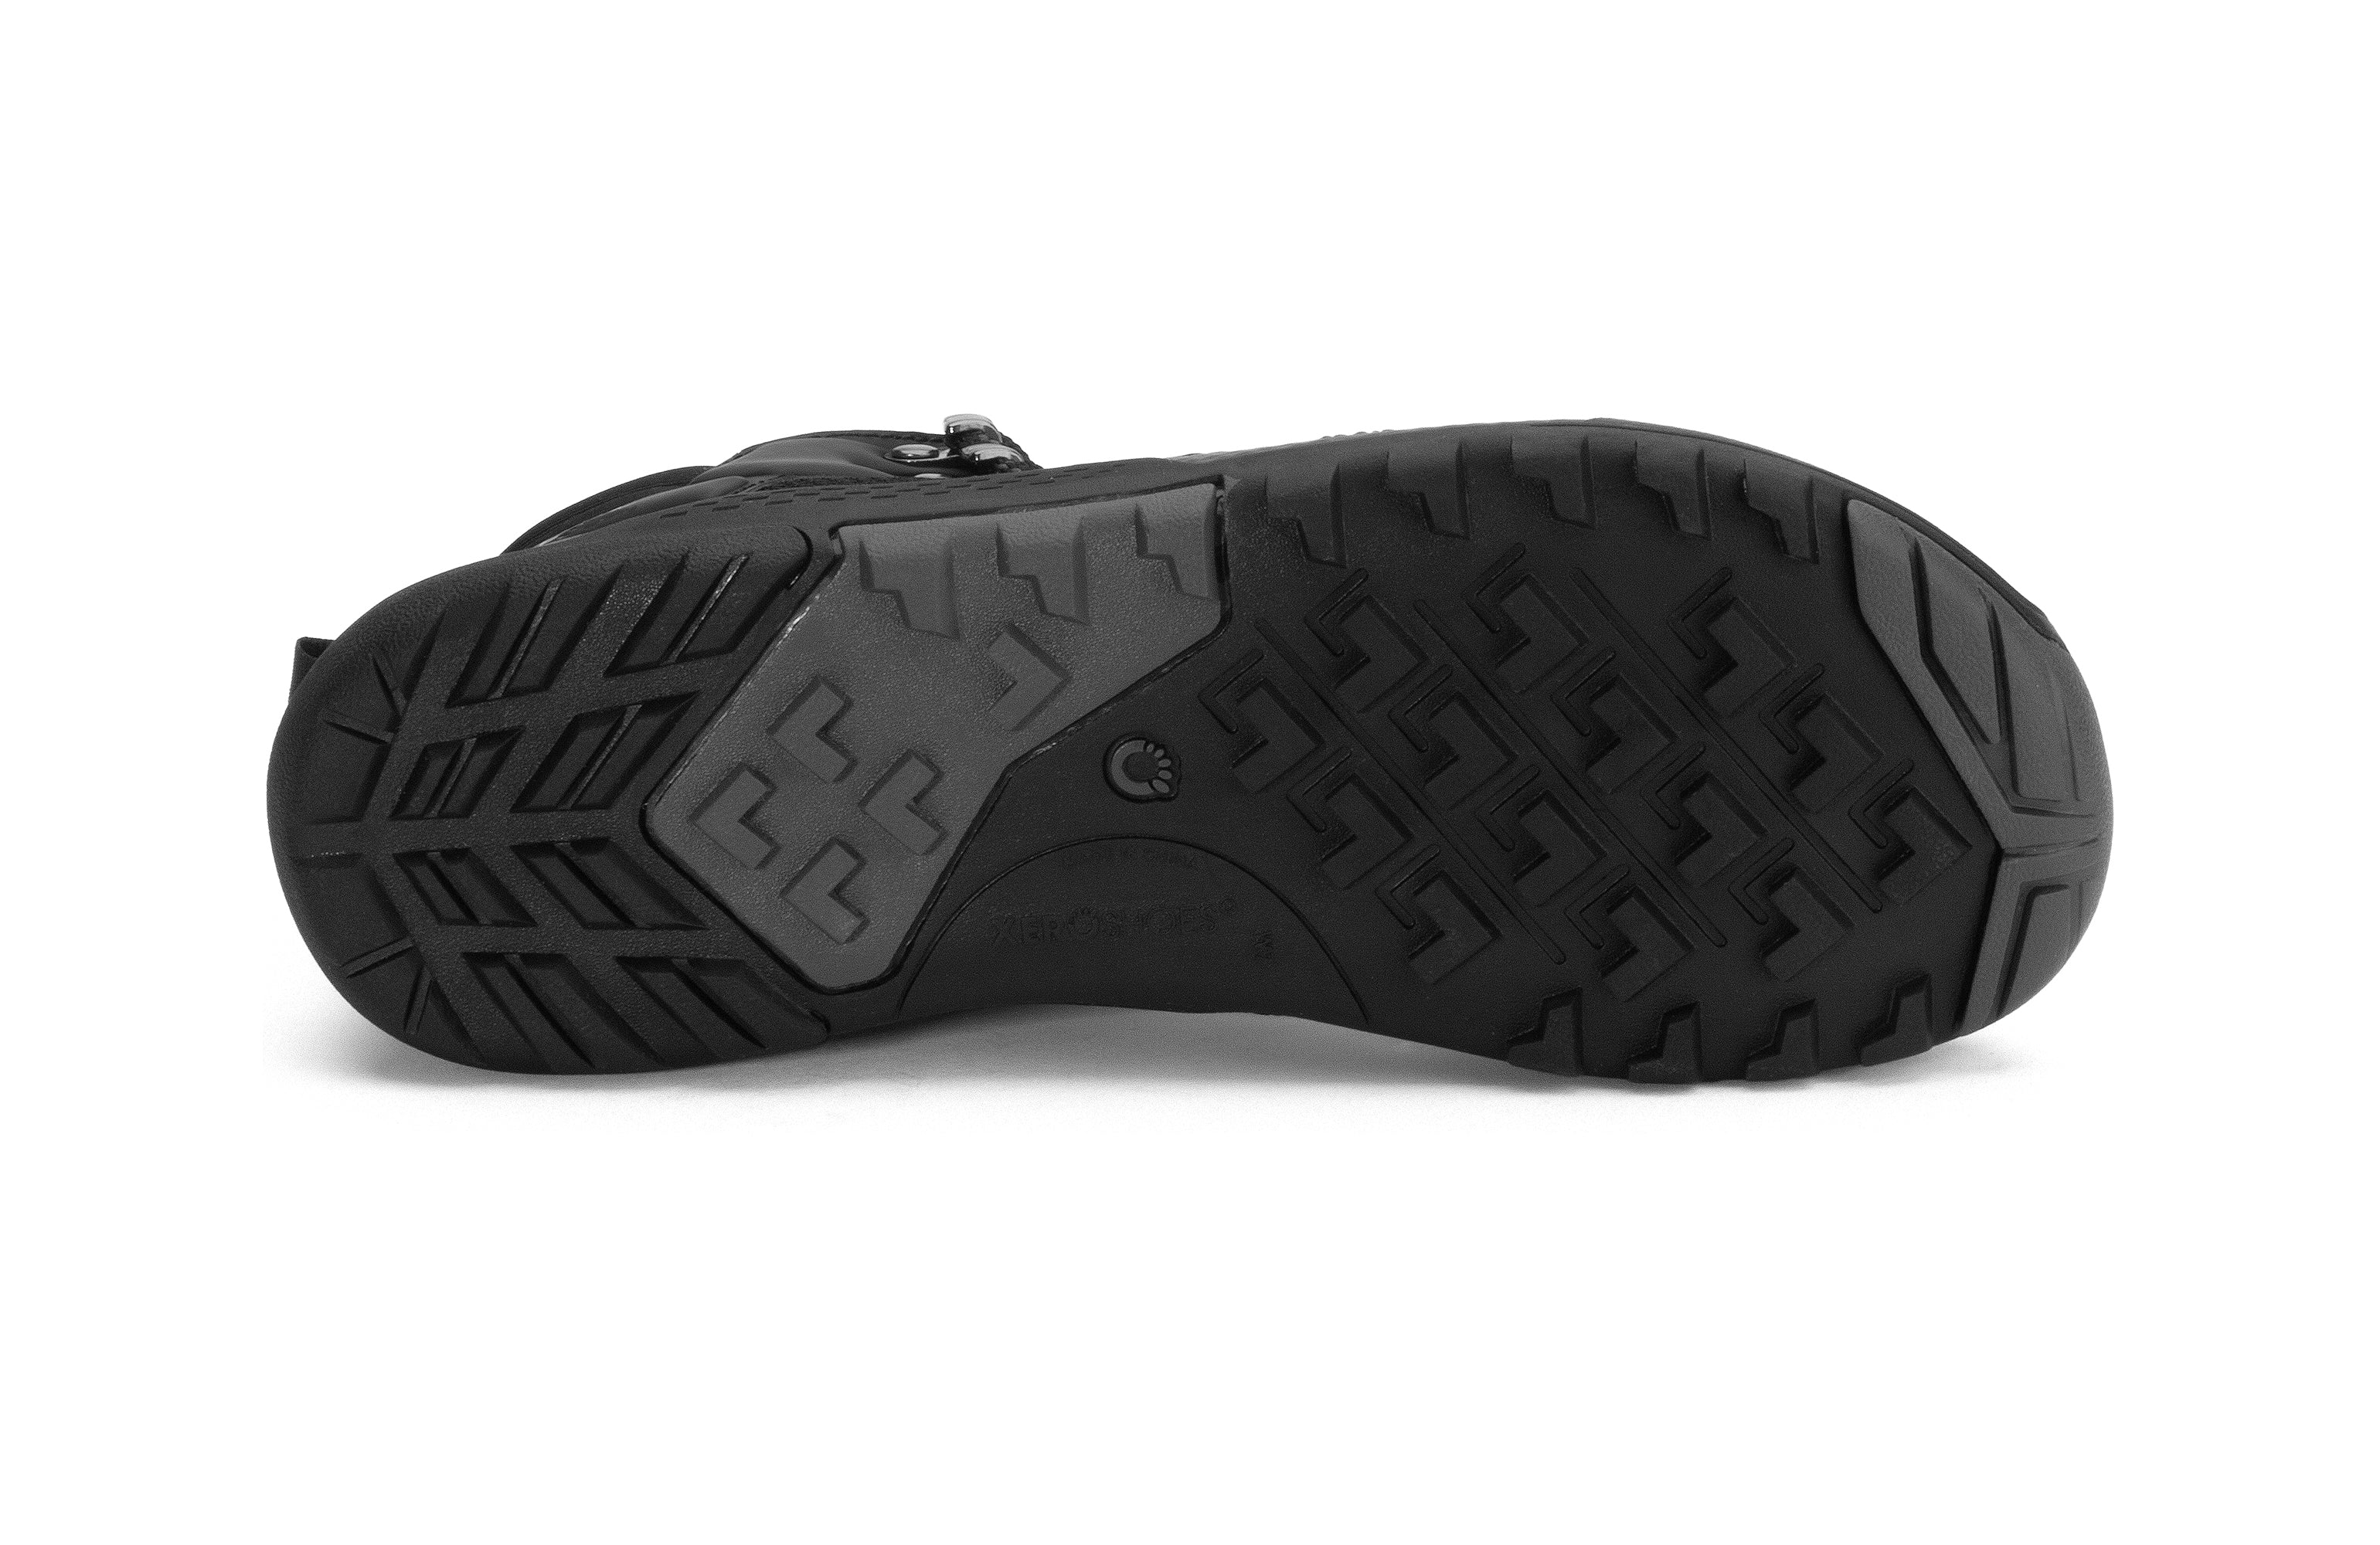 Xero Shoes Xcursion Fusion Womens barfods vandrestøvler til kvinder i farven black titanium, saal